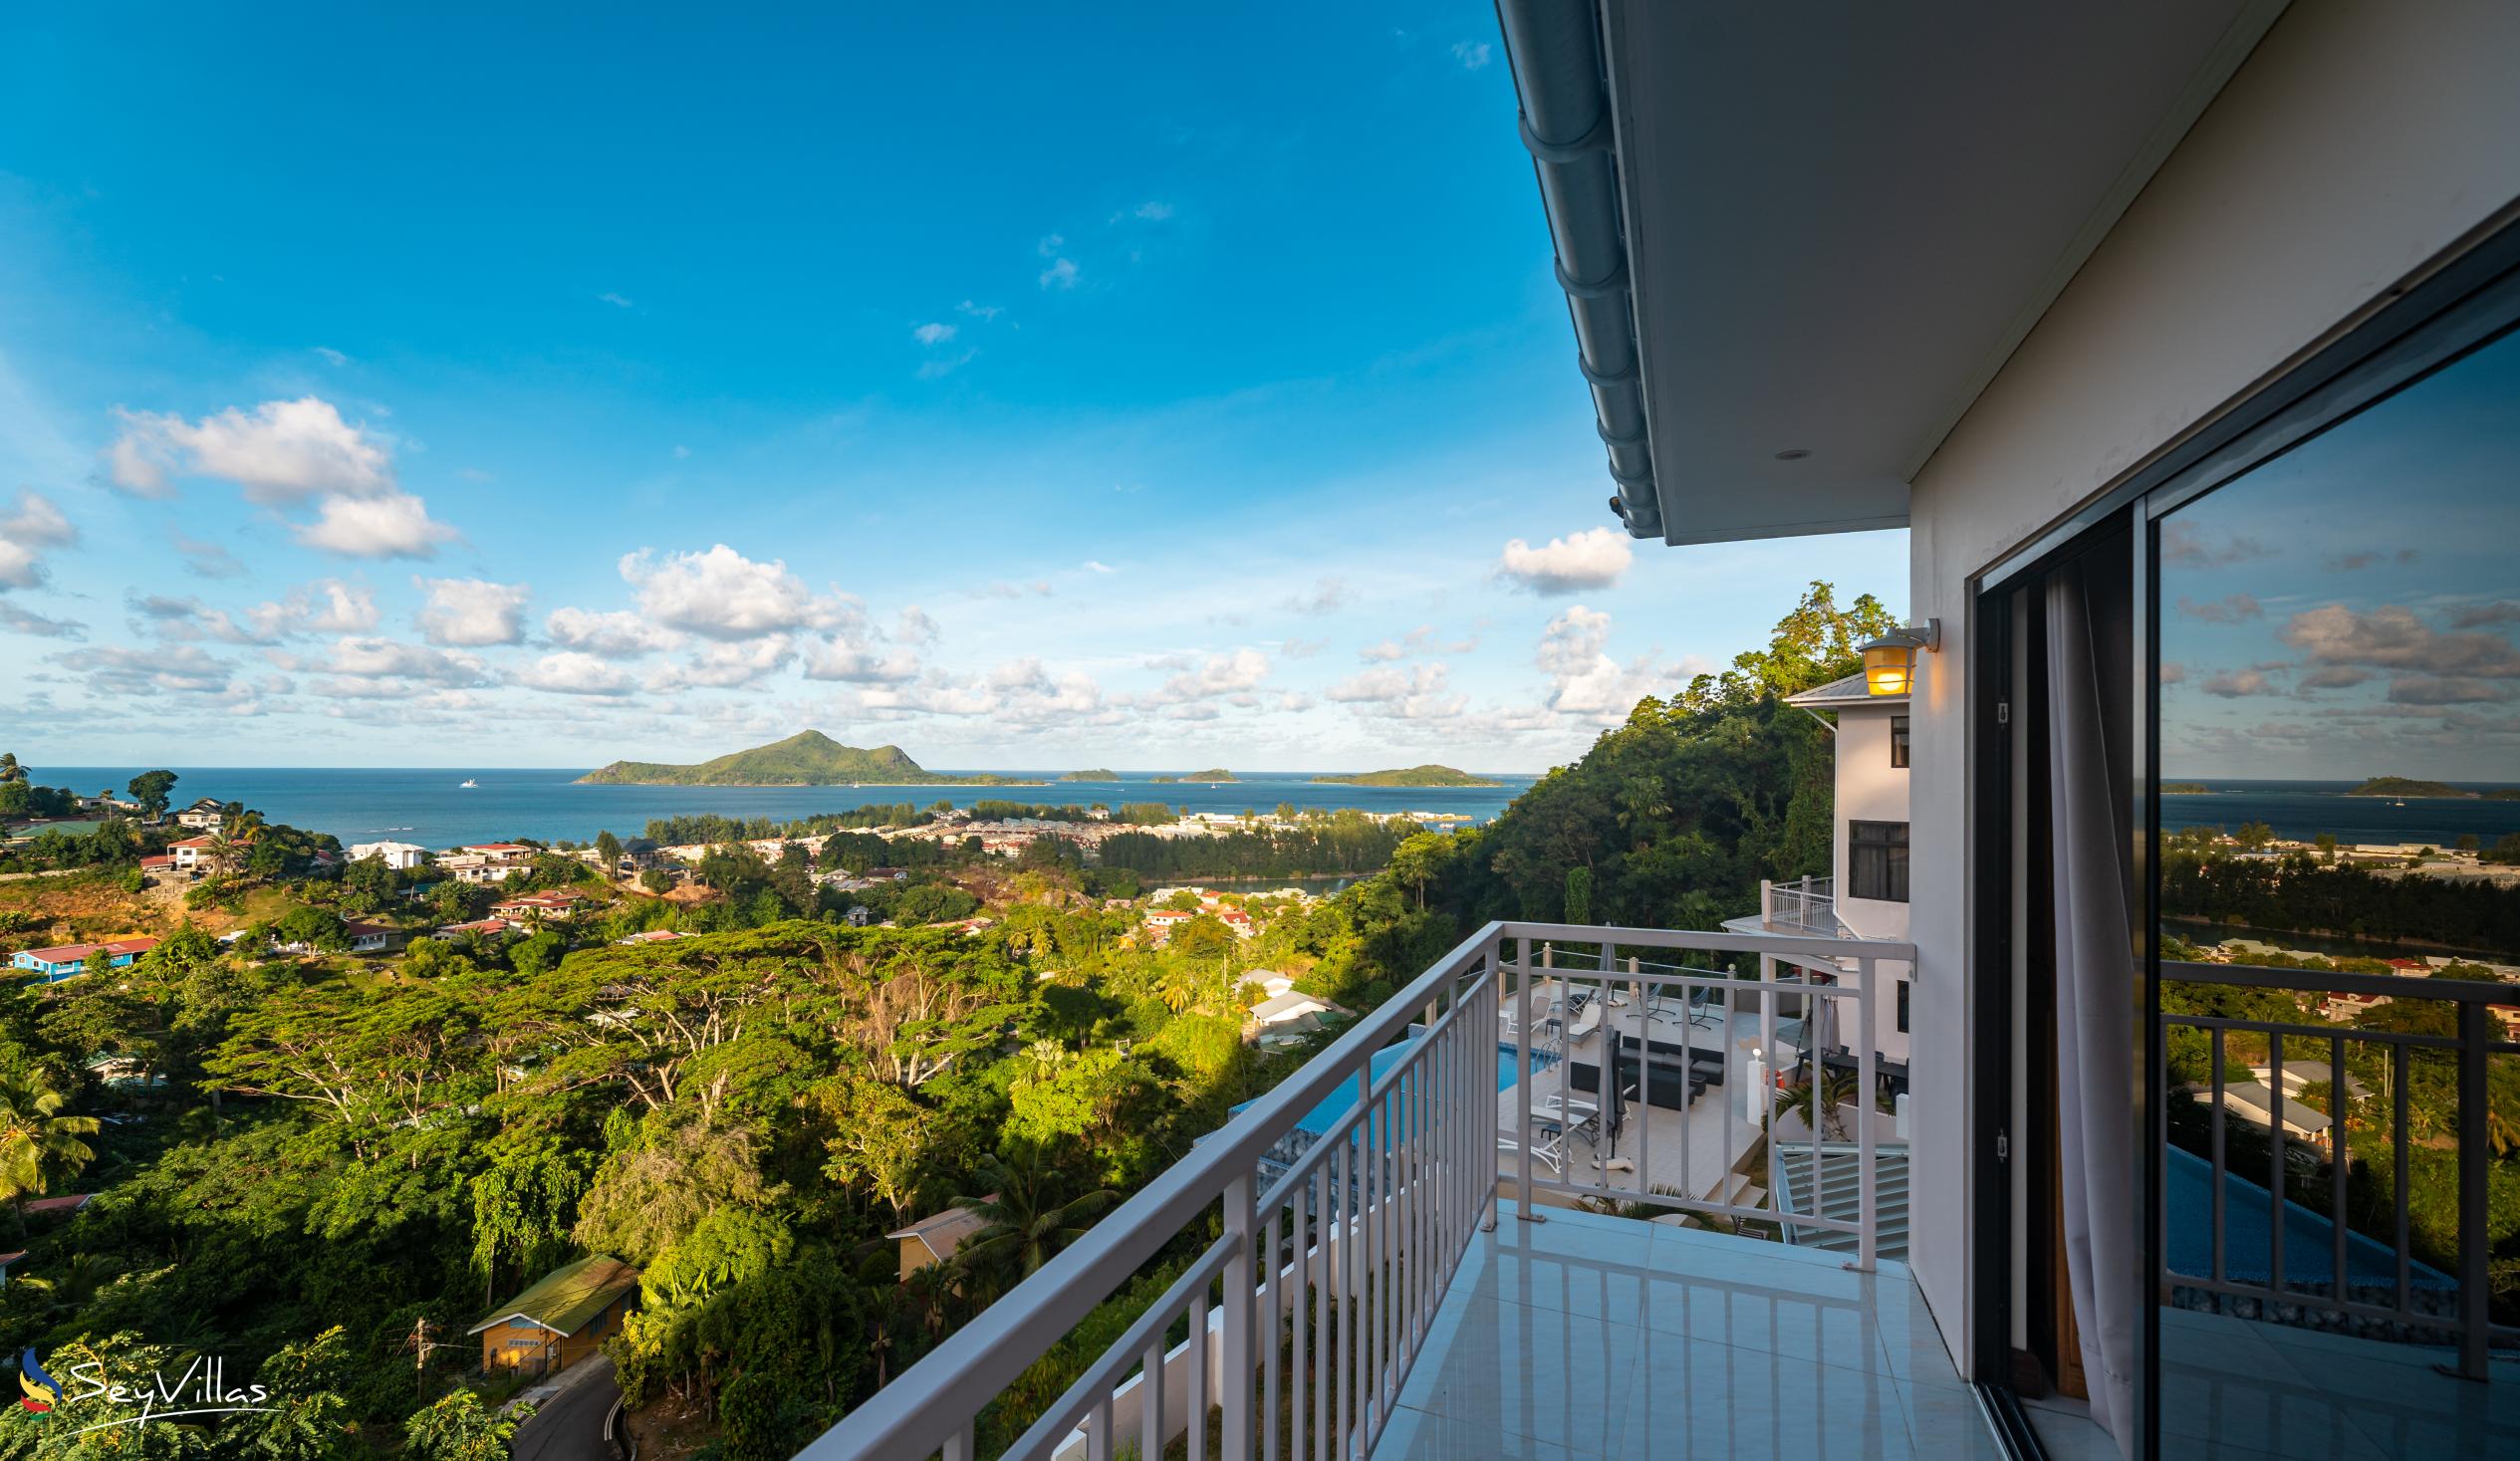 Foto 26: Maison L'Horizon - Appartamento con 1 camera Zekler - Mahé (Seychelles)